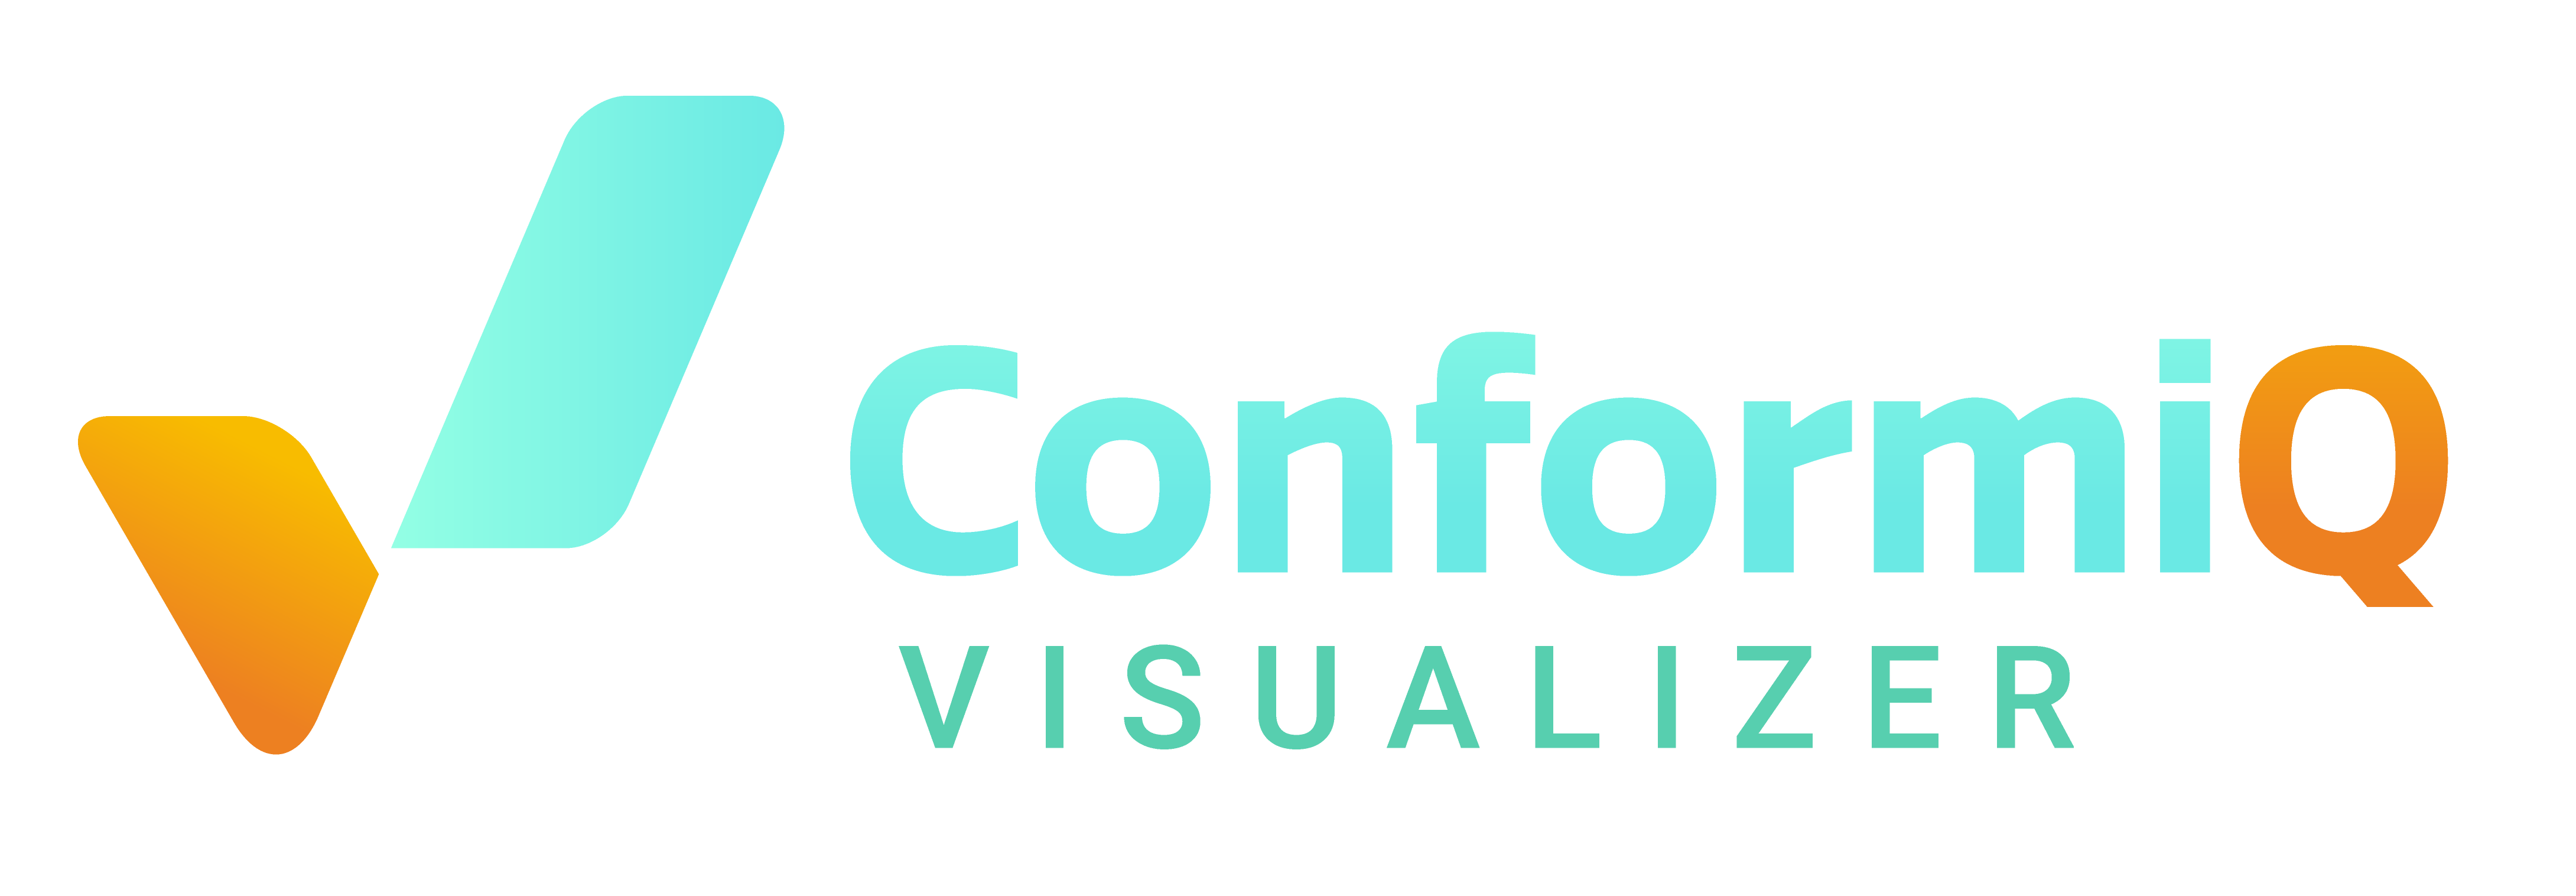 Visualizer-logo